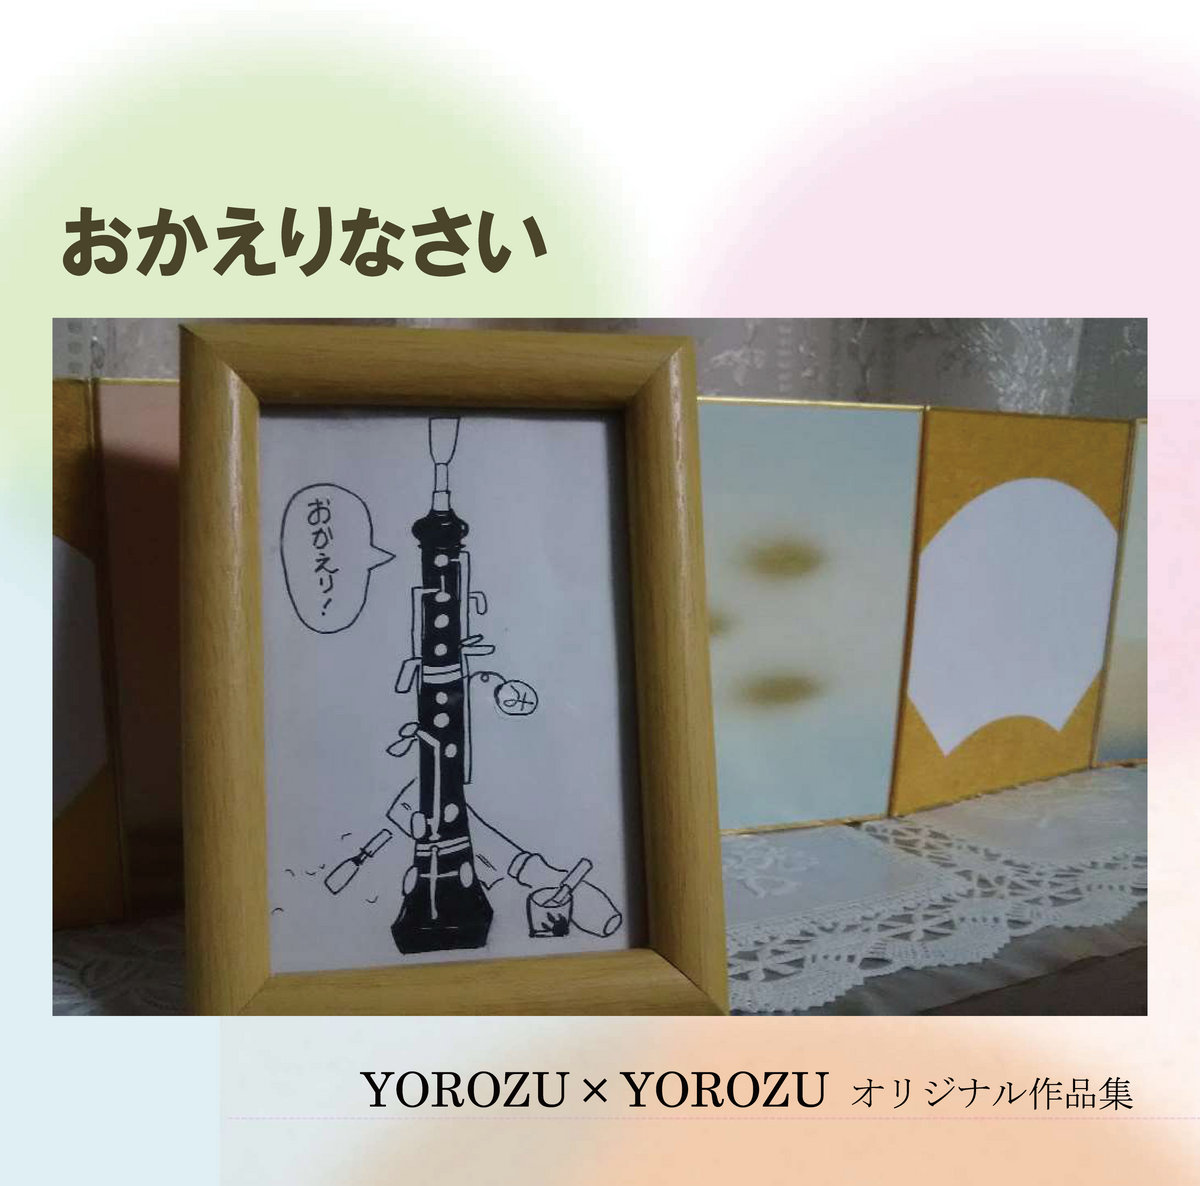 ZOUKIKAKU　edition)　remastered　YOROZU×YOROZUオリジナル作品集　おかえりなさい　(2020　YOROZU×YOROZU　YOROZU　RECORDS